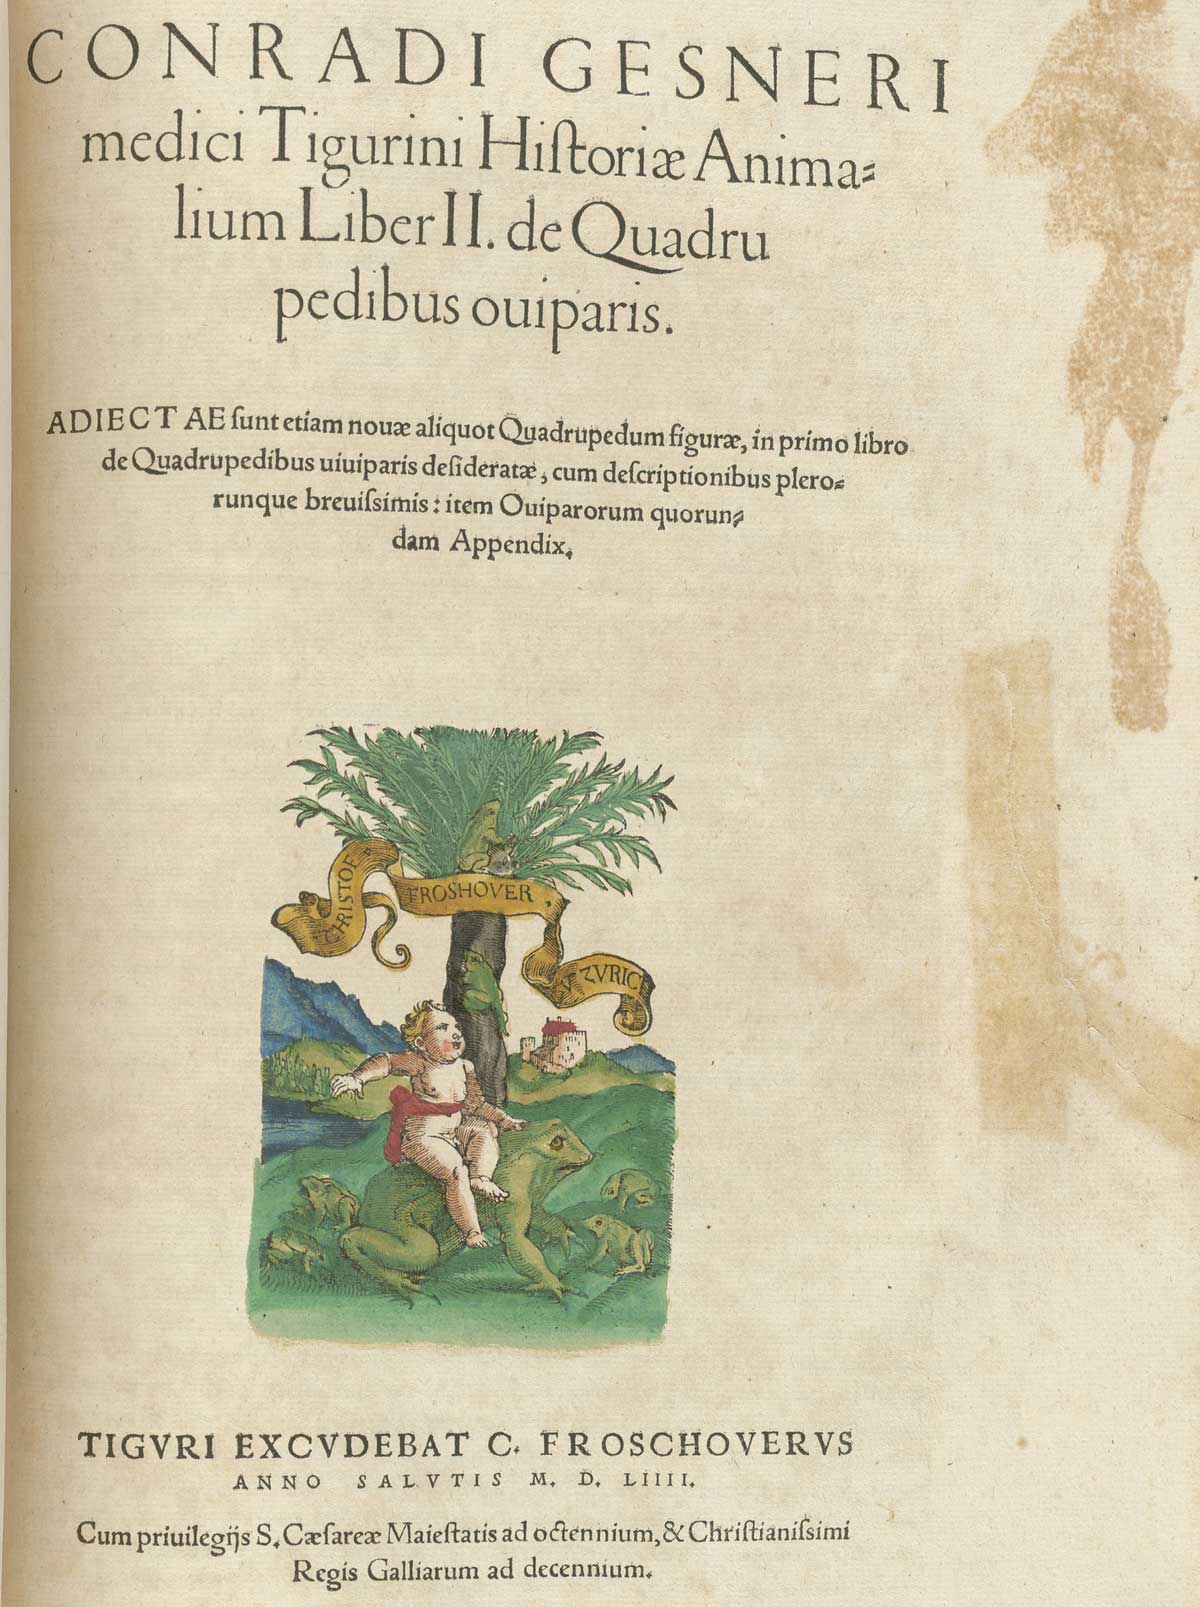 The titlepage from volume 2 of Conrad Gessner's Conradi Gesneri medici Tigurini Historiae animalium, featuring the Christoph Froschauer's printer device.